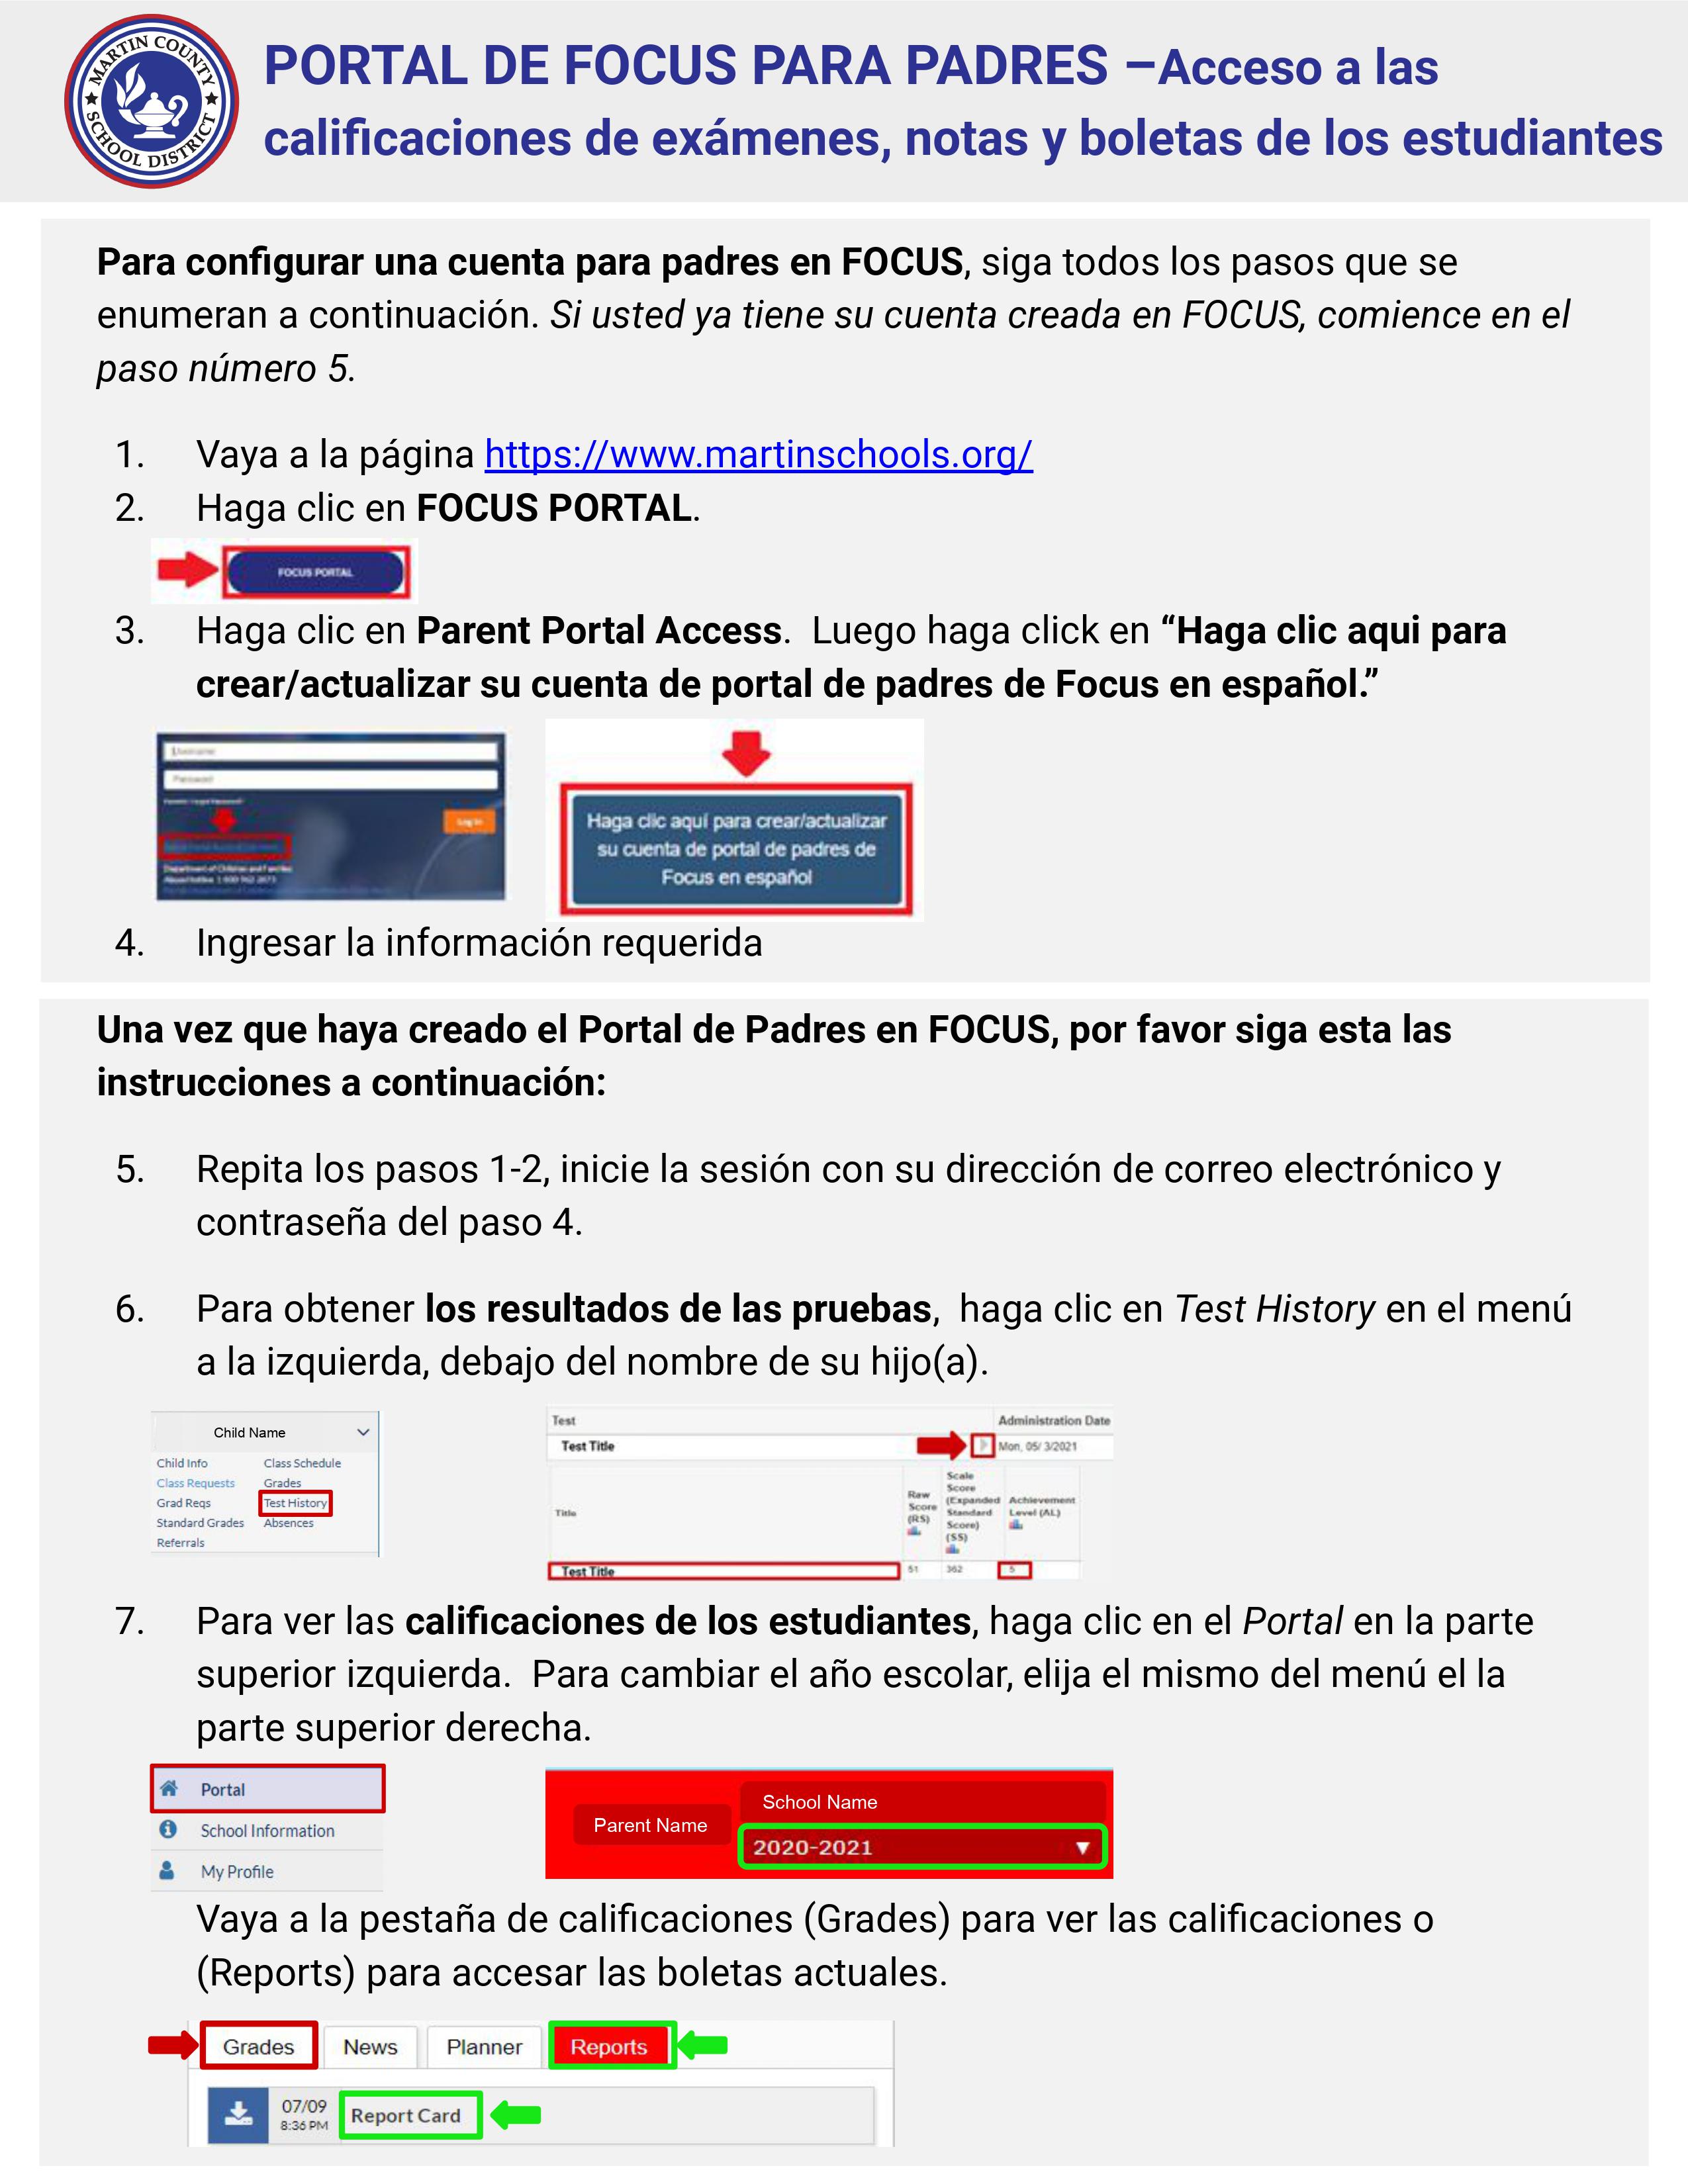 FOCUS Parent Portal Instructions - Spanish